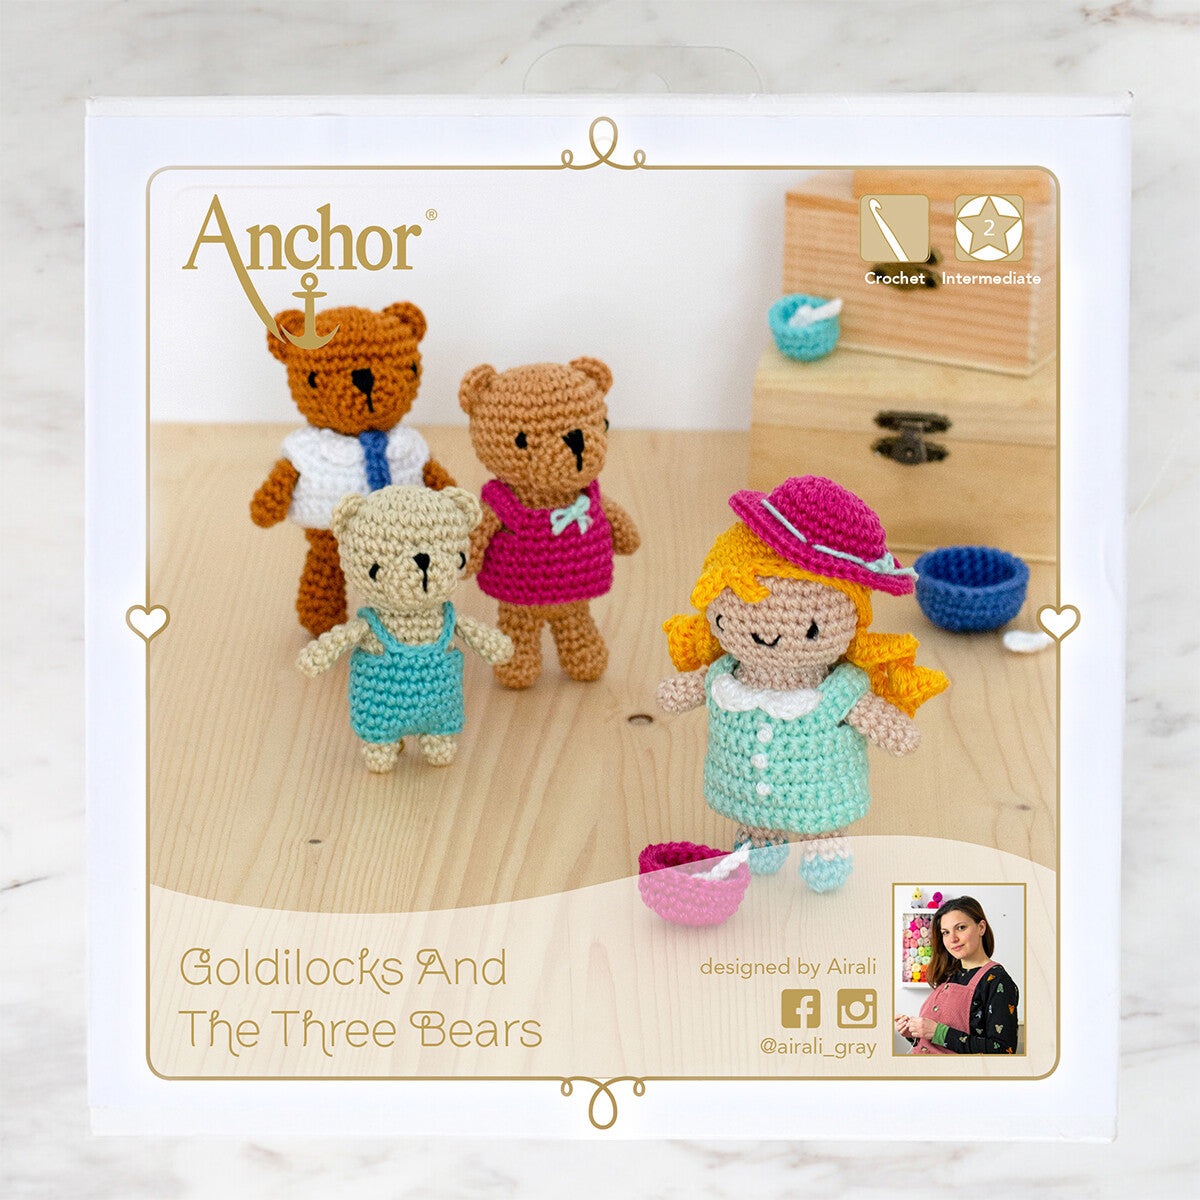 Anchor Goldilocks And The Three Bears Amigurumi Set - A28C003-09061